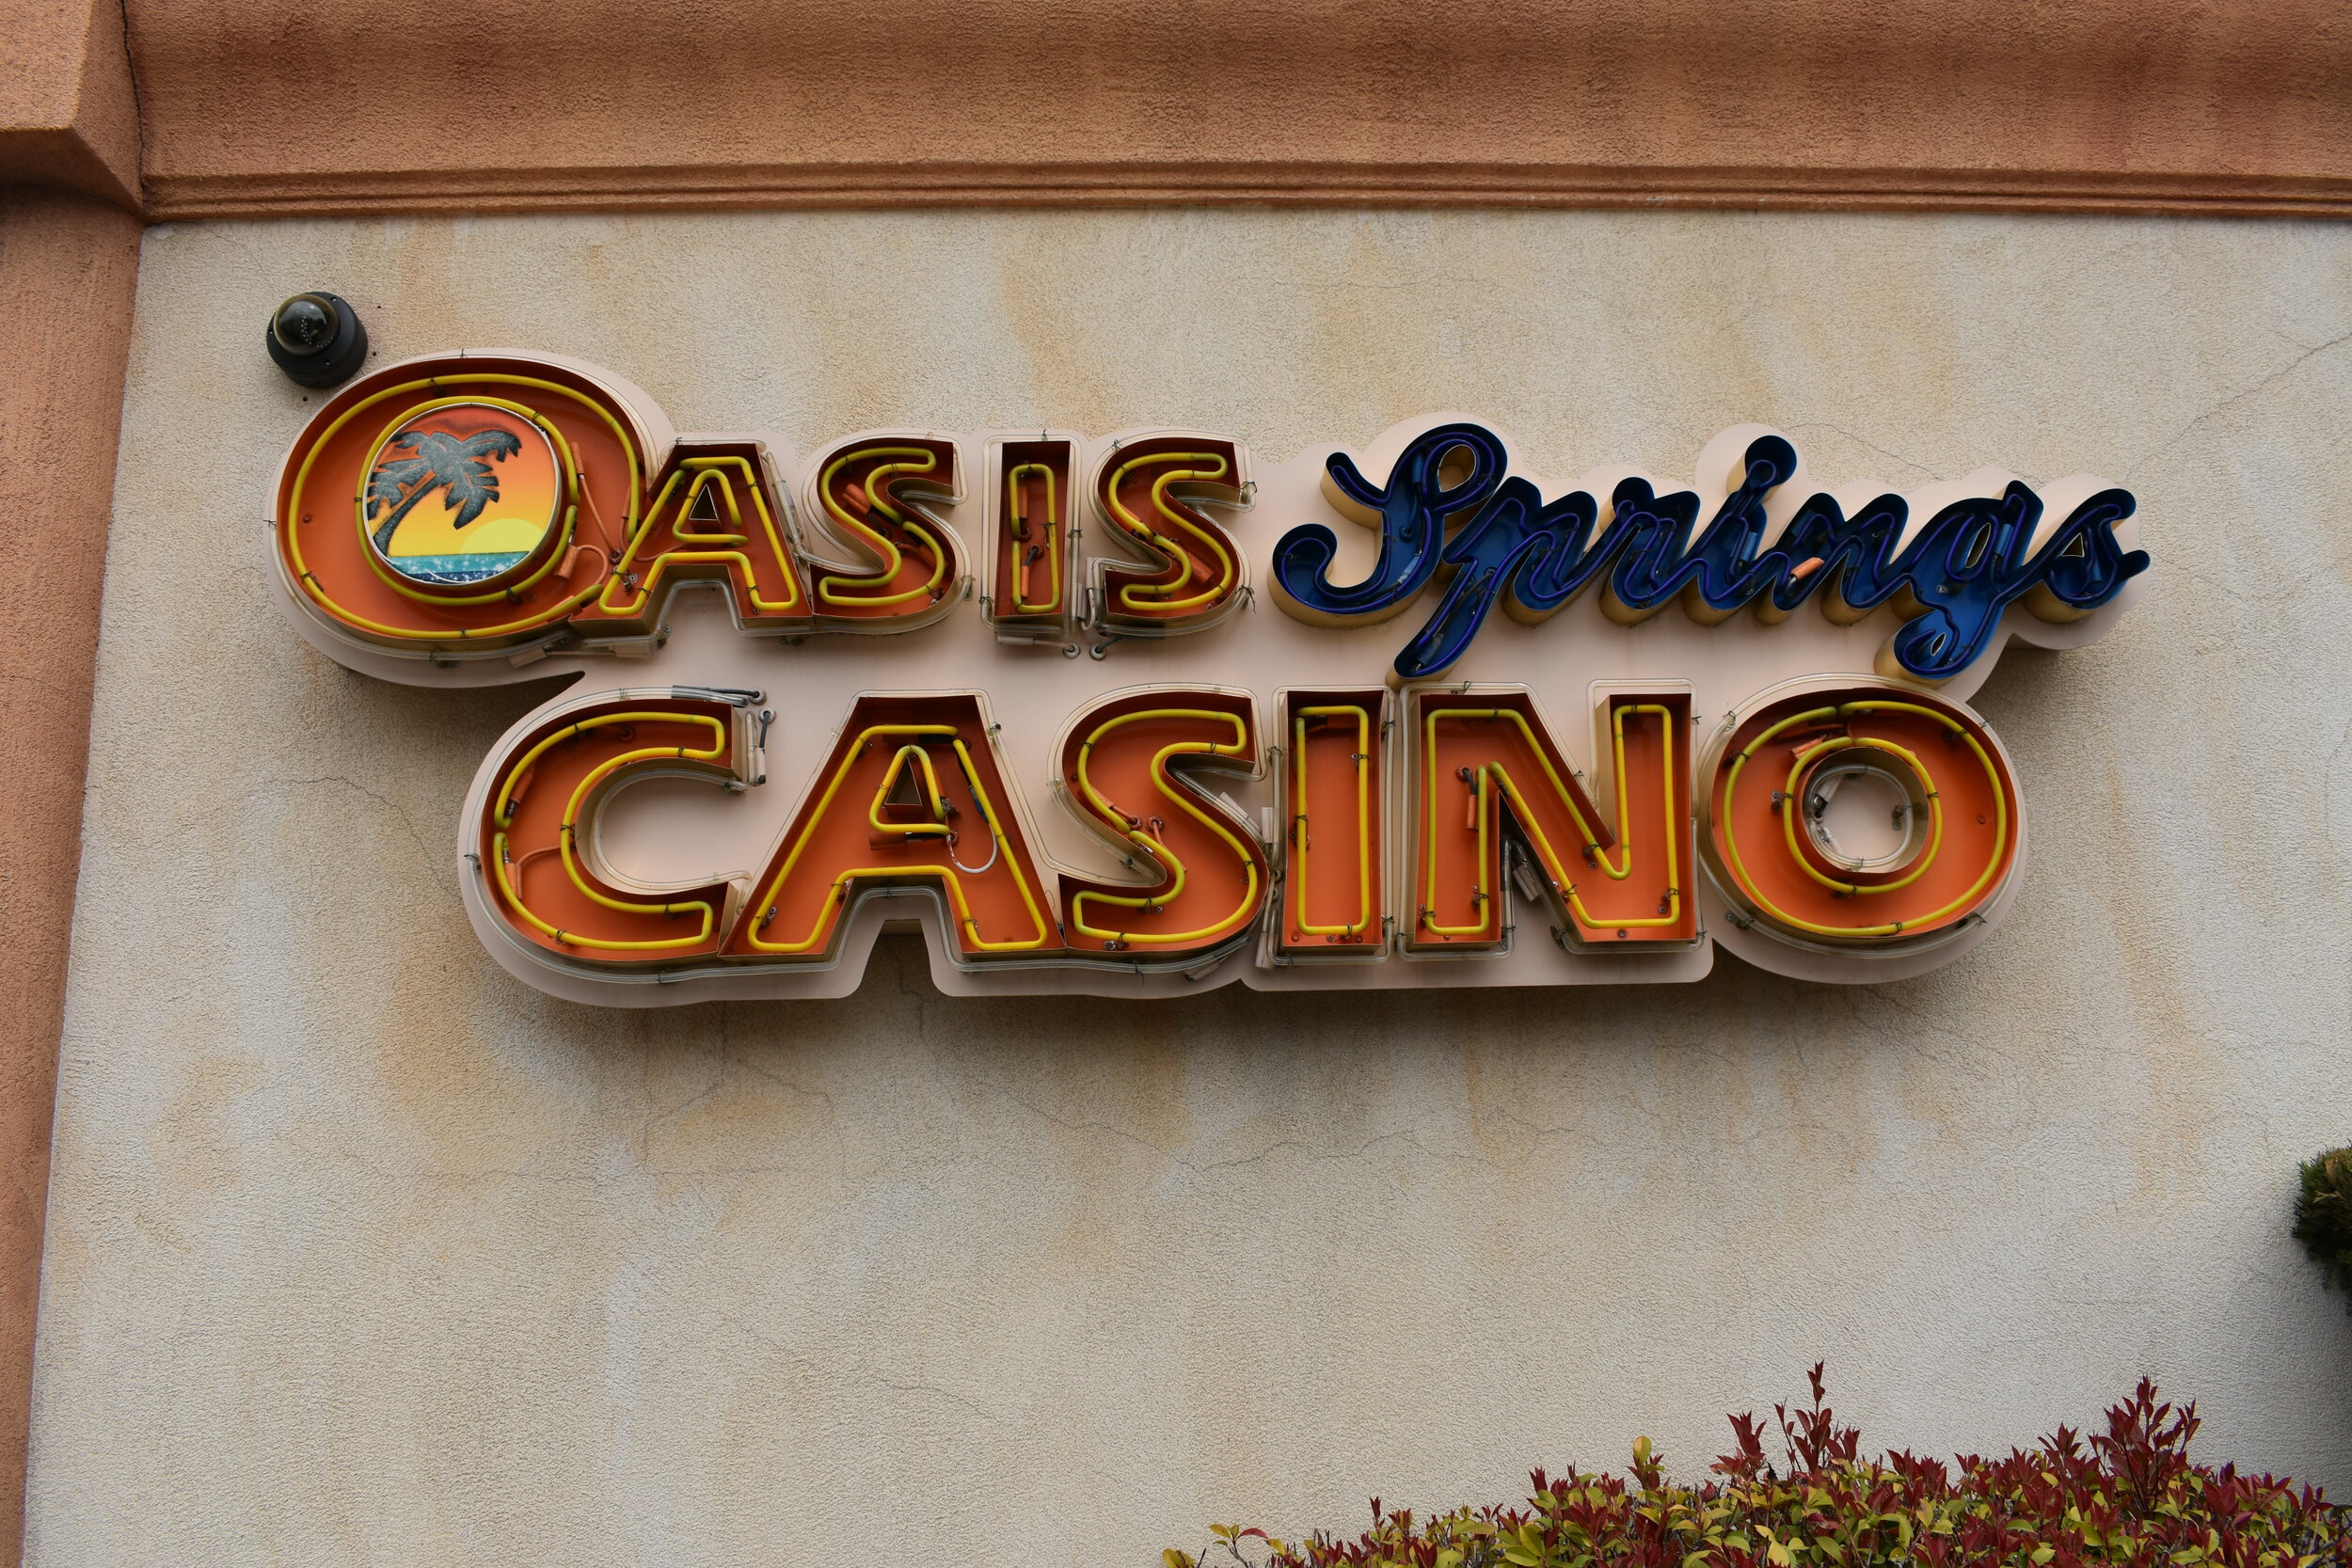 Oasis Springs Casino wall mounted signs, Fallon, Nevada